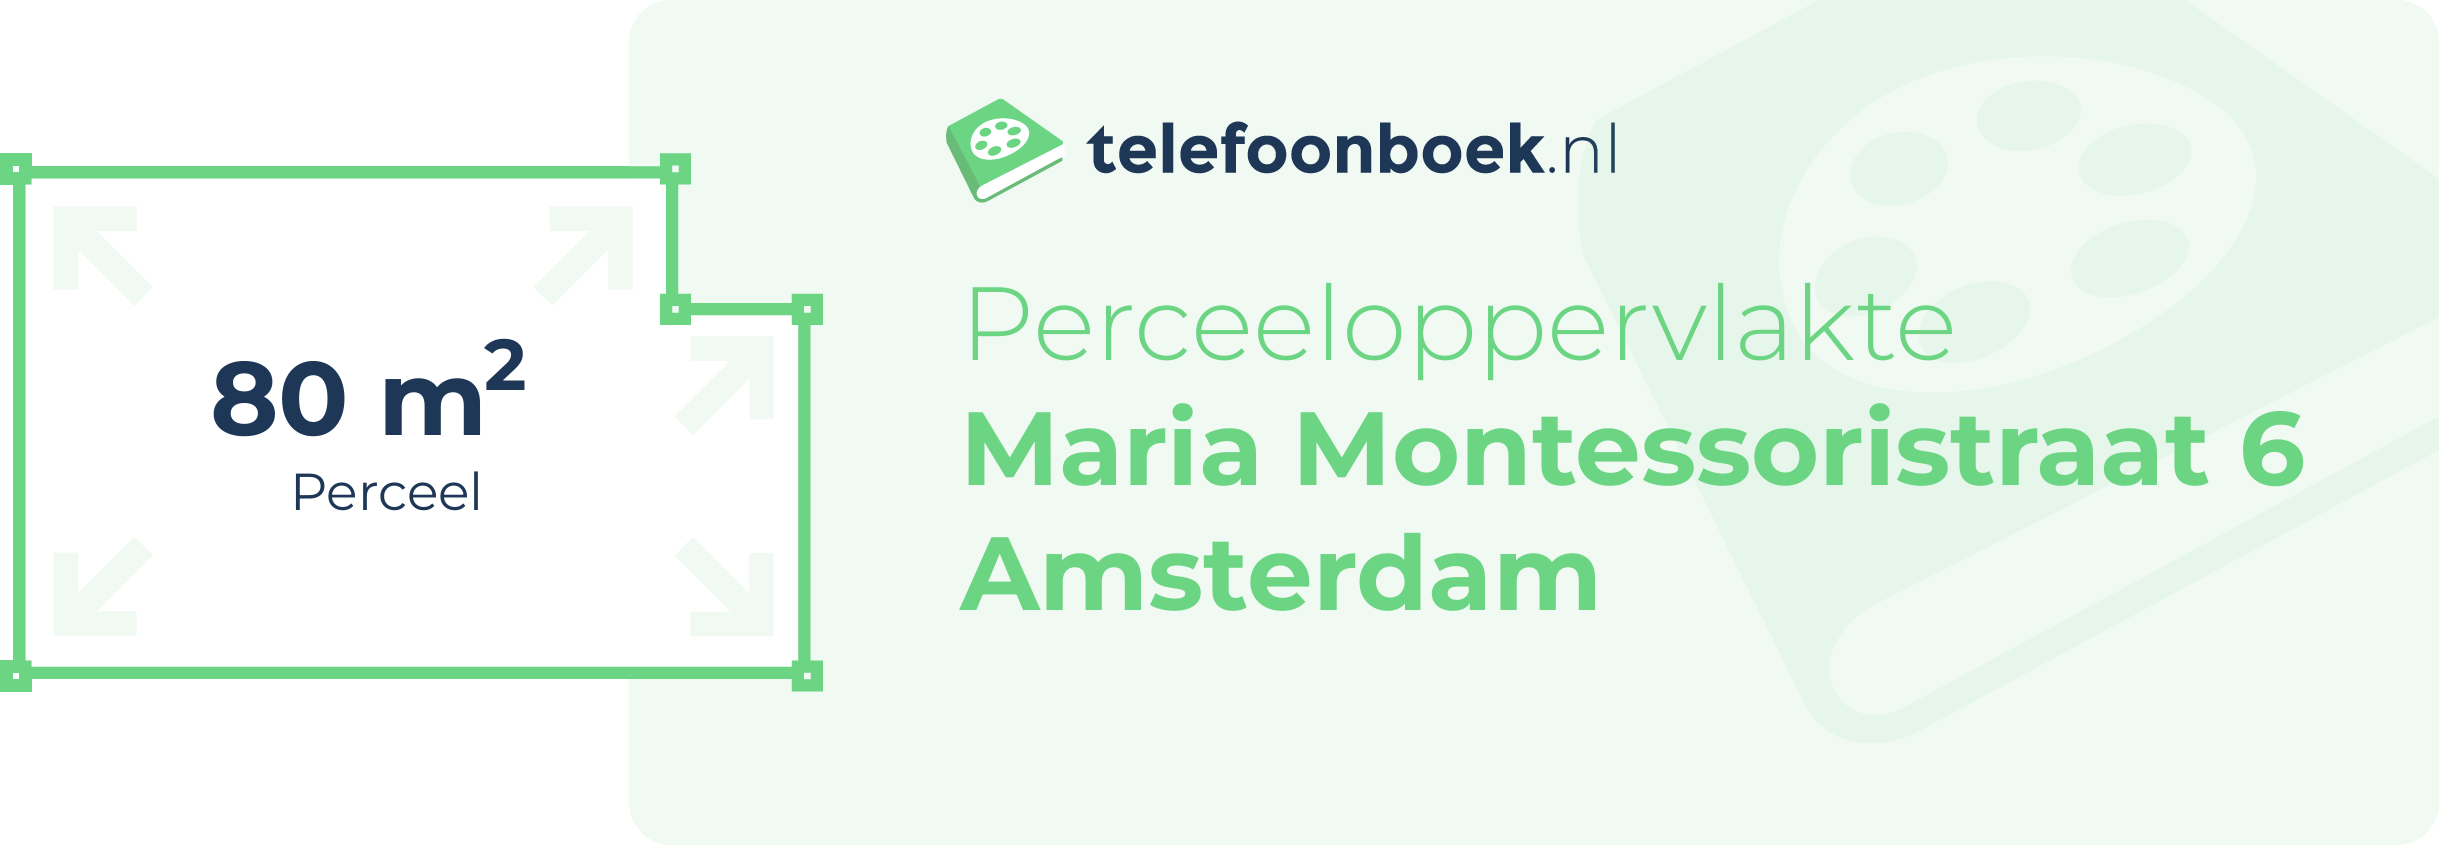 Perceeloppervlakte Maria Montessoristraat 6 Amsterdam